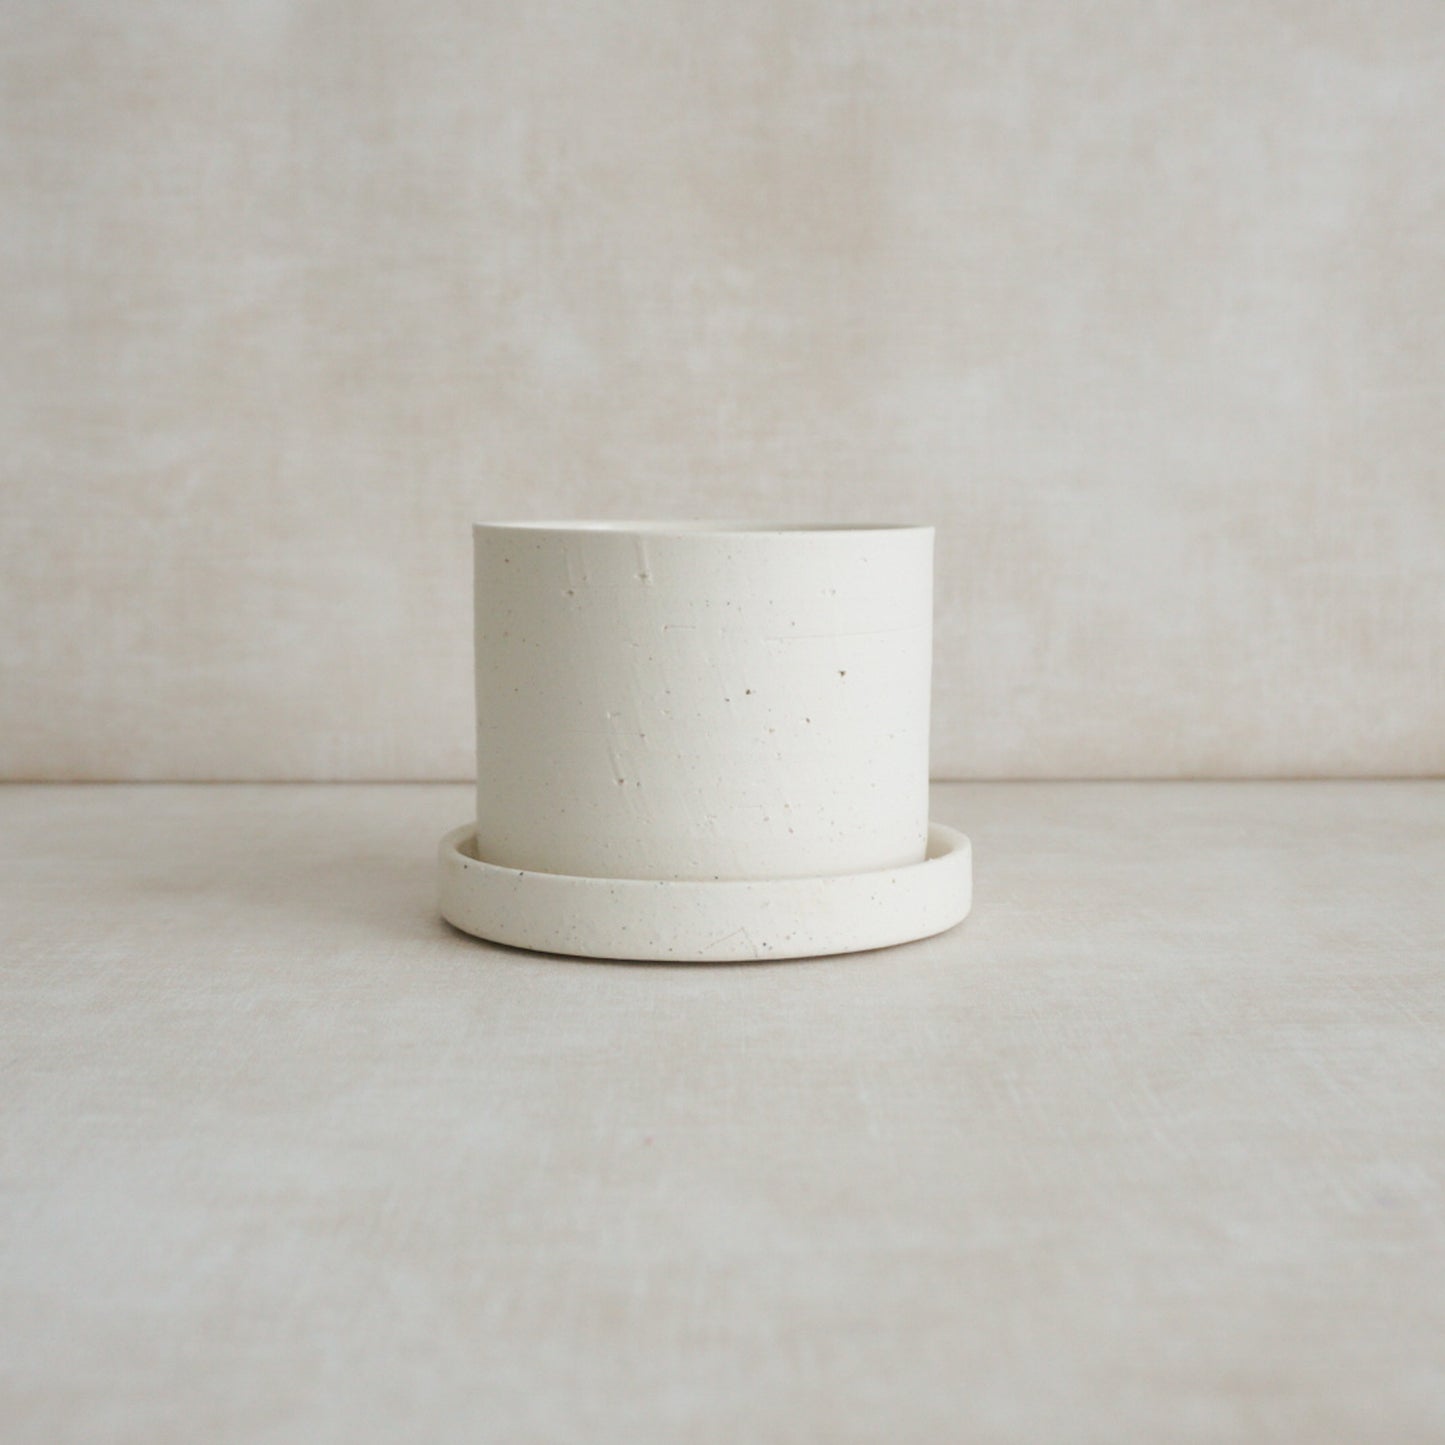 Off-White Ceramic Planter Pot with Dish